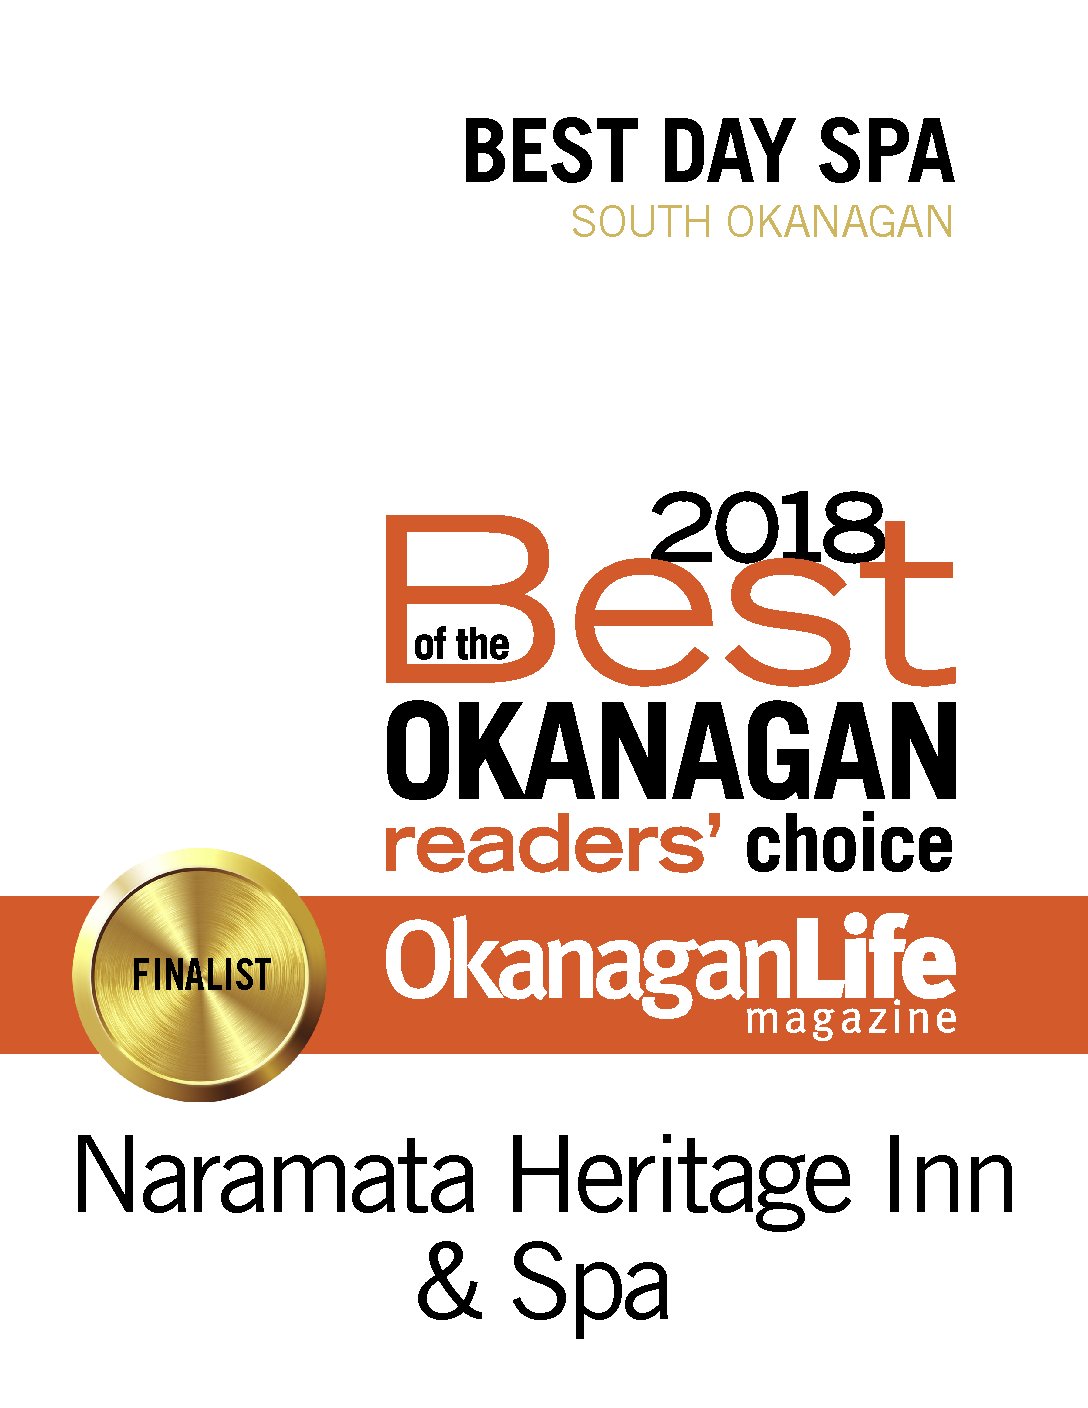 Naramata Heritage Inn & Spa